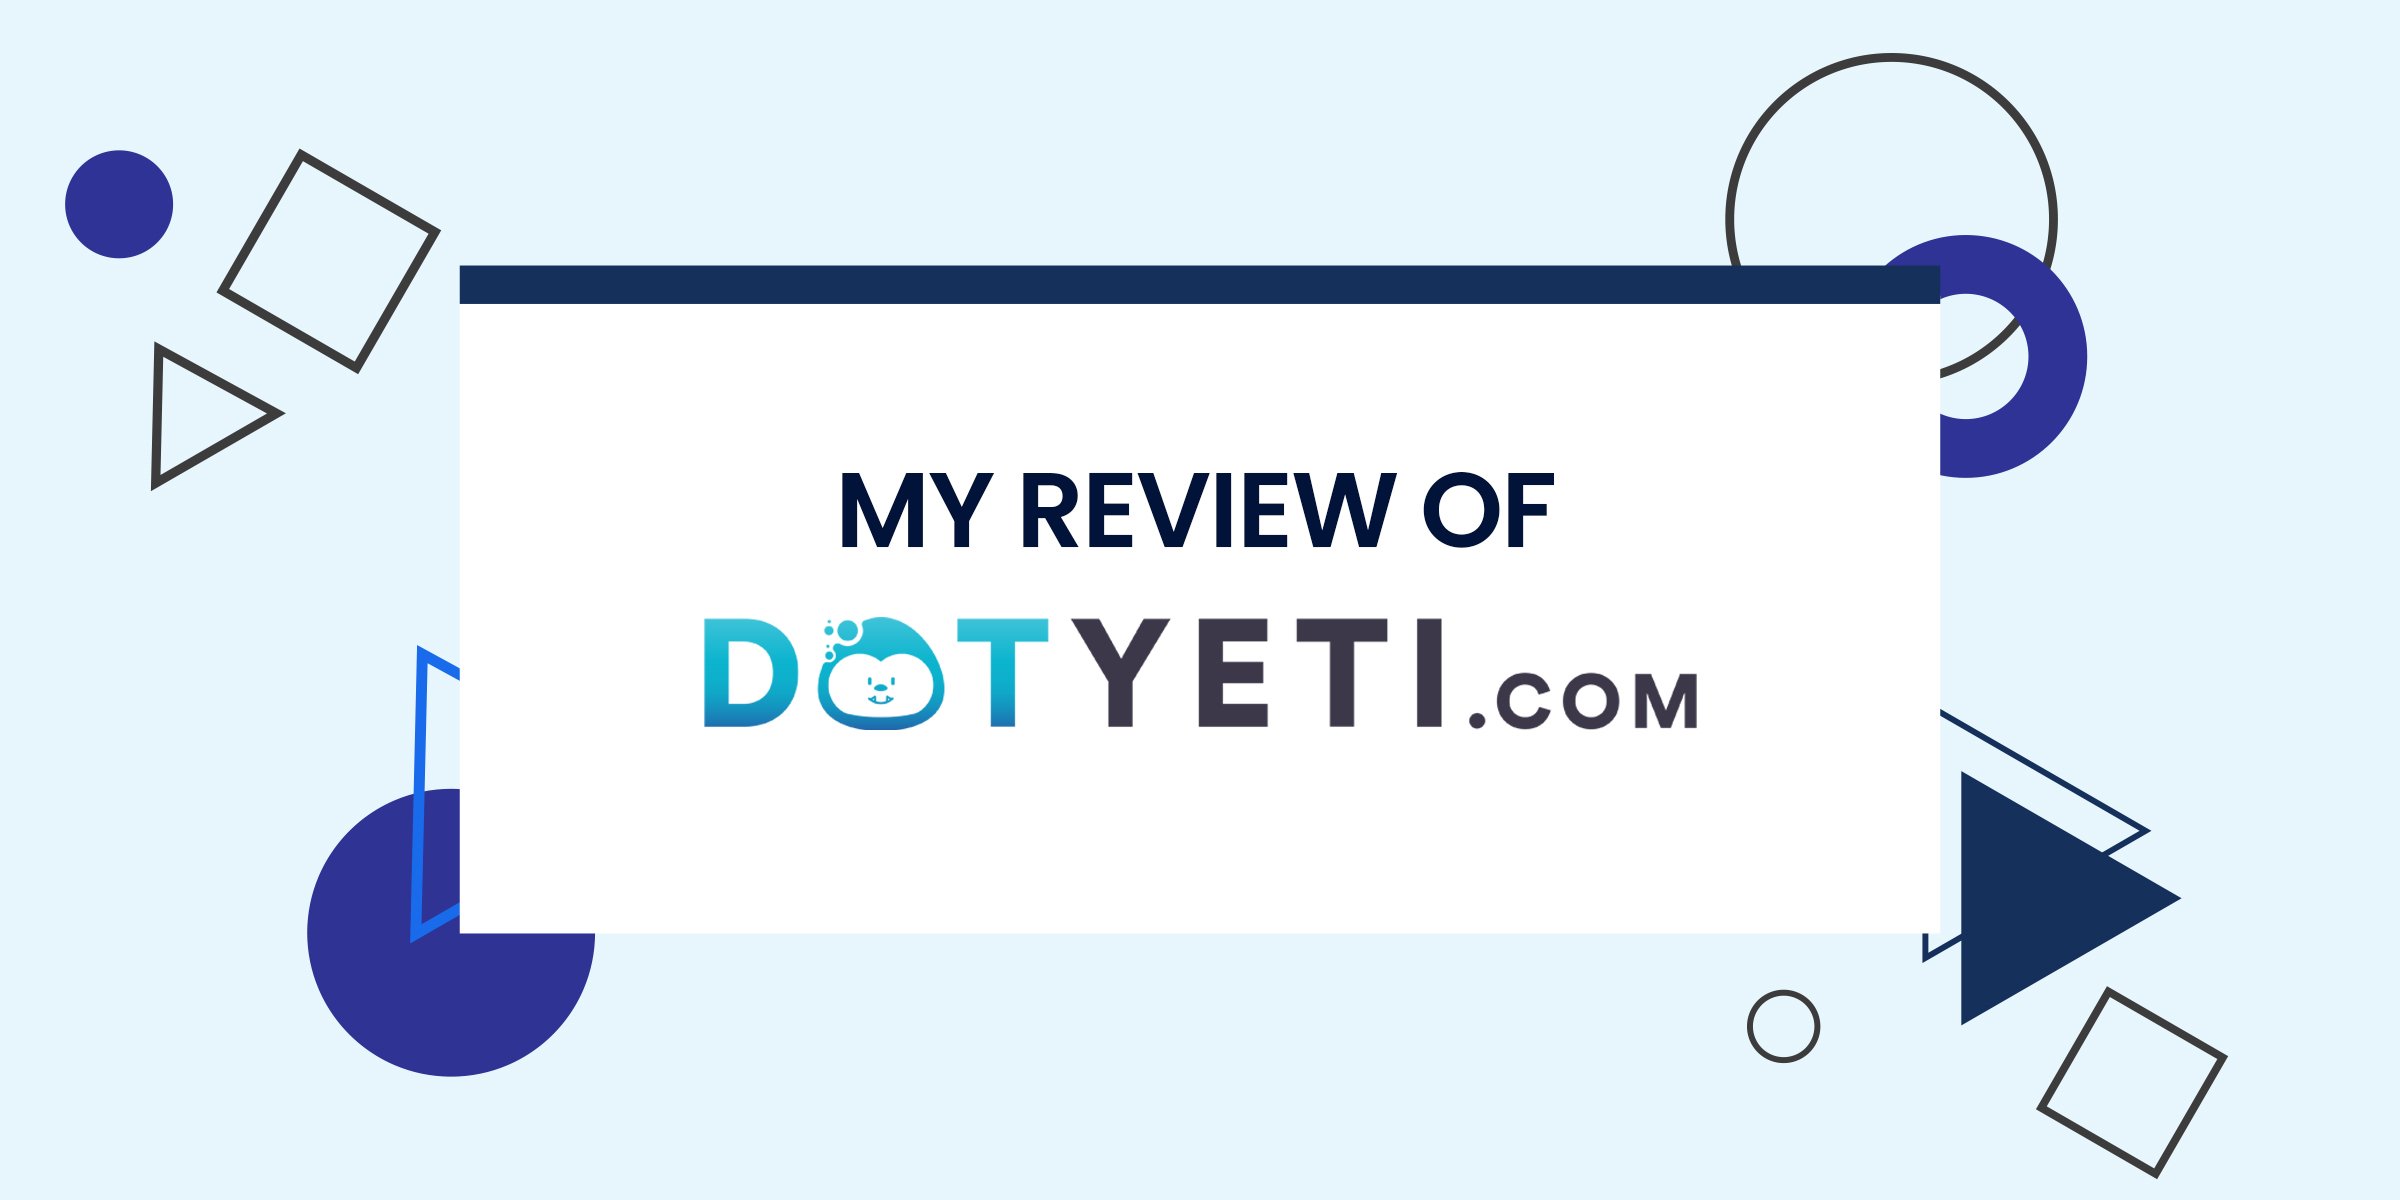 My Review of DotYeti